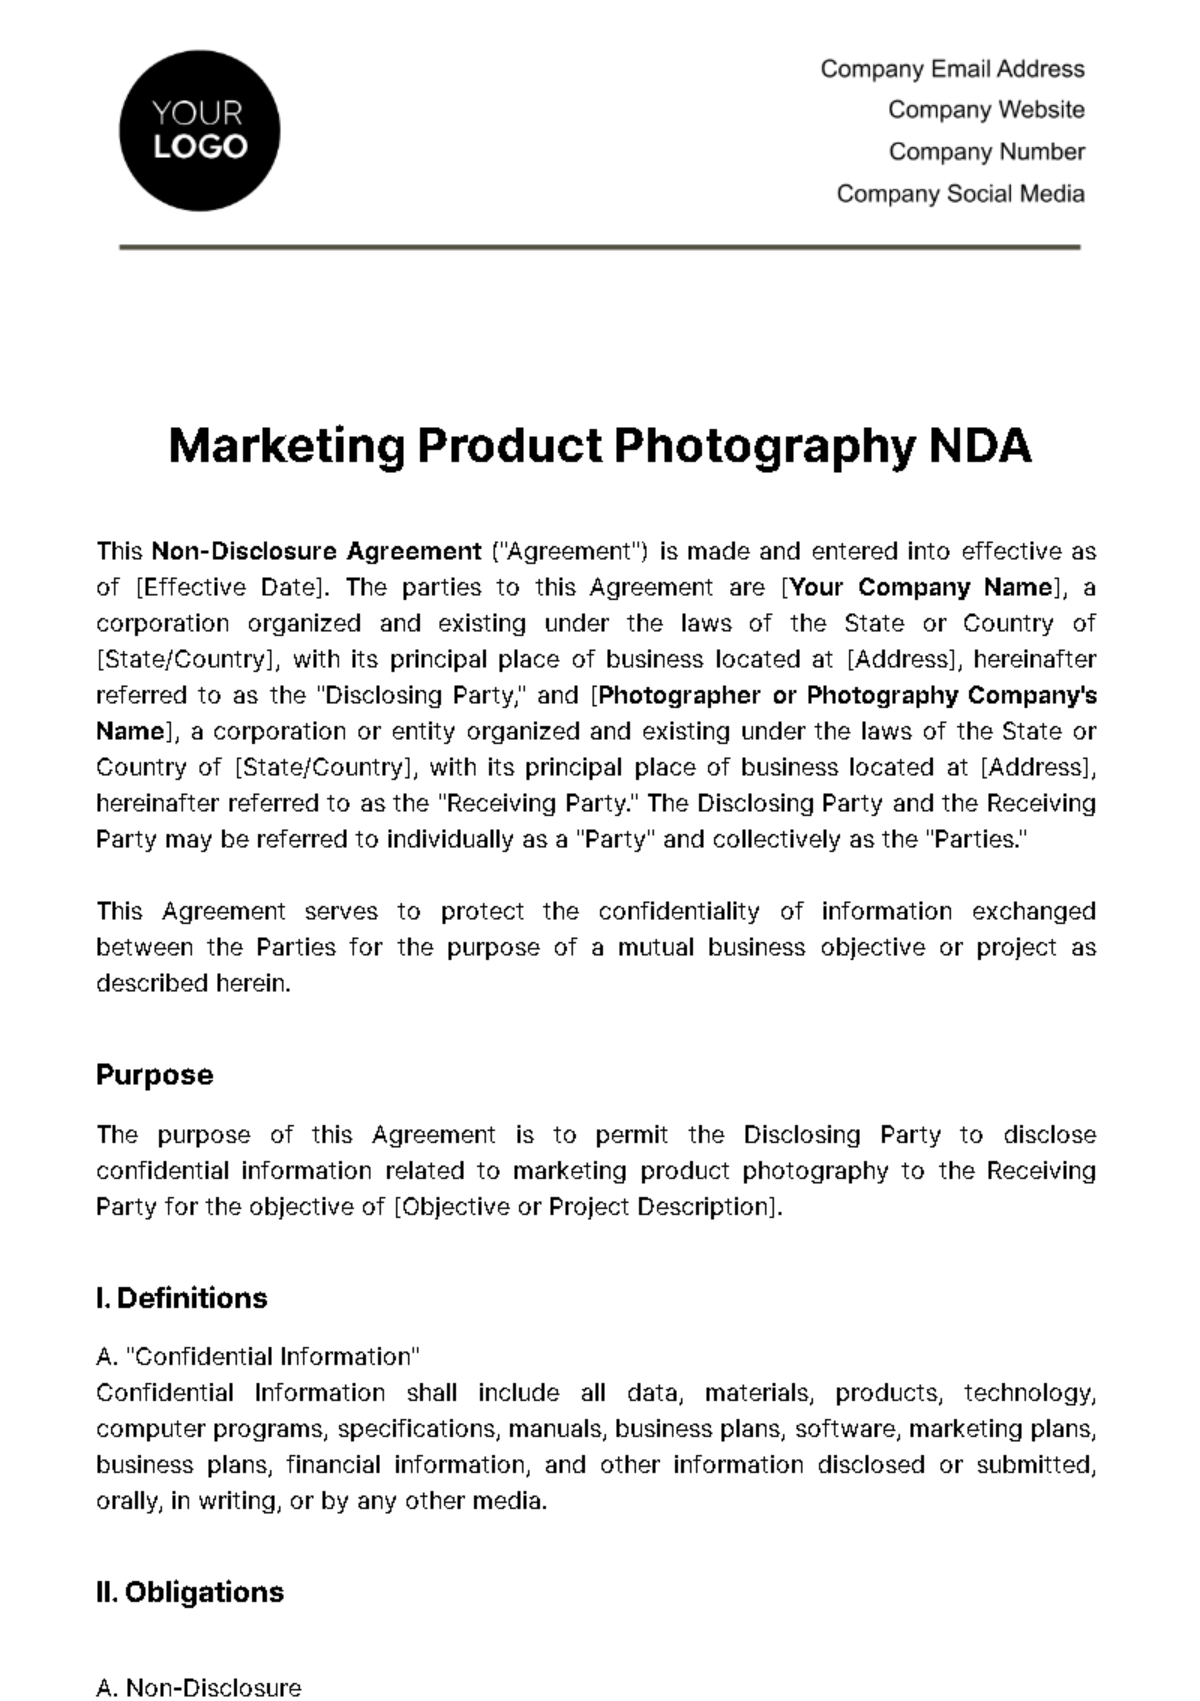 Marketing Product Photography NDA Template